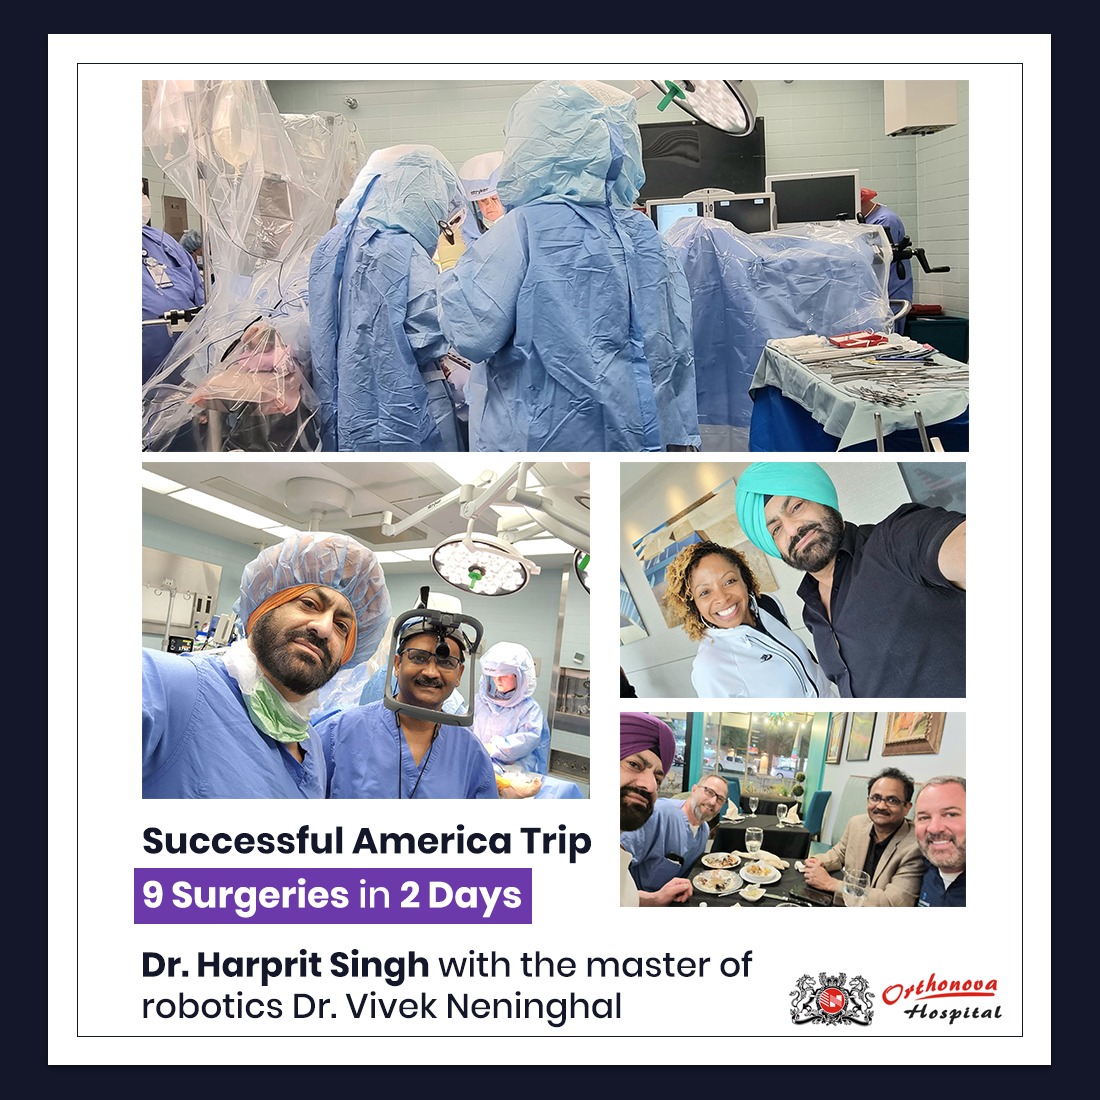 Successful America Trip.
9 Surgeries in 2 Days

Dr. Harprit Singh with the Master of Robotics Dr. Vivek Neninghal

#orthonovahospitaljalandhar #drharpritsingh #orthopaedicsurgeon #orthodoctor #mastersofrobotics #americatrip #surgery #hospital #doctors #jalandhar  #america #usa